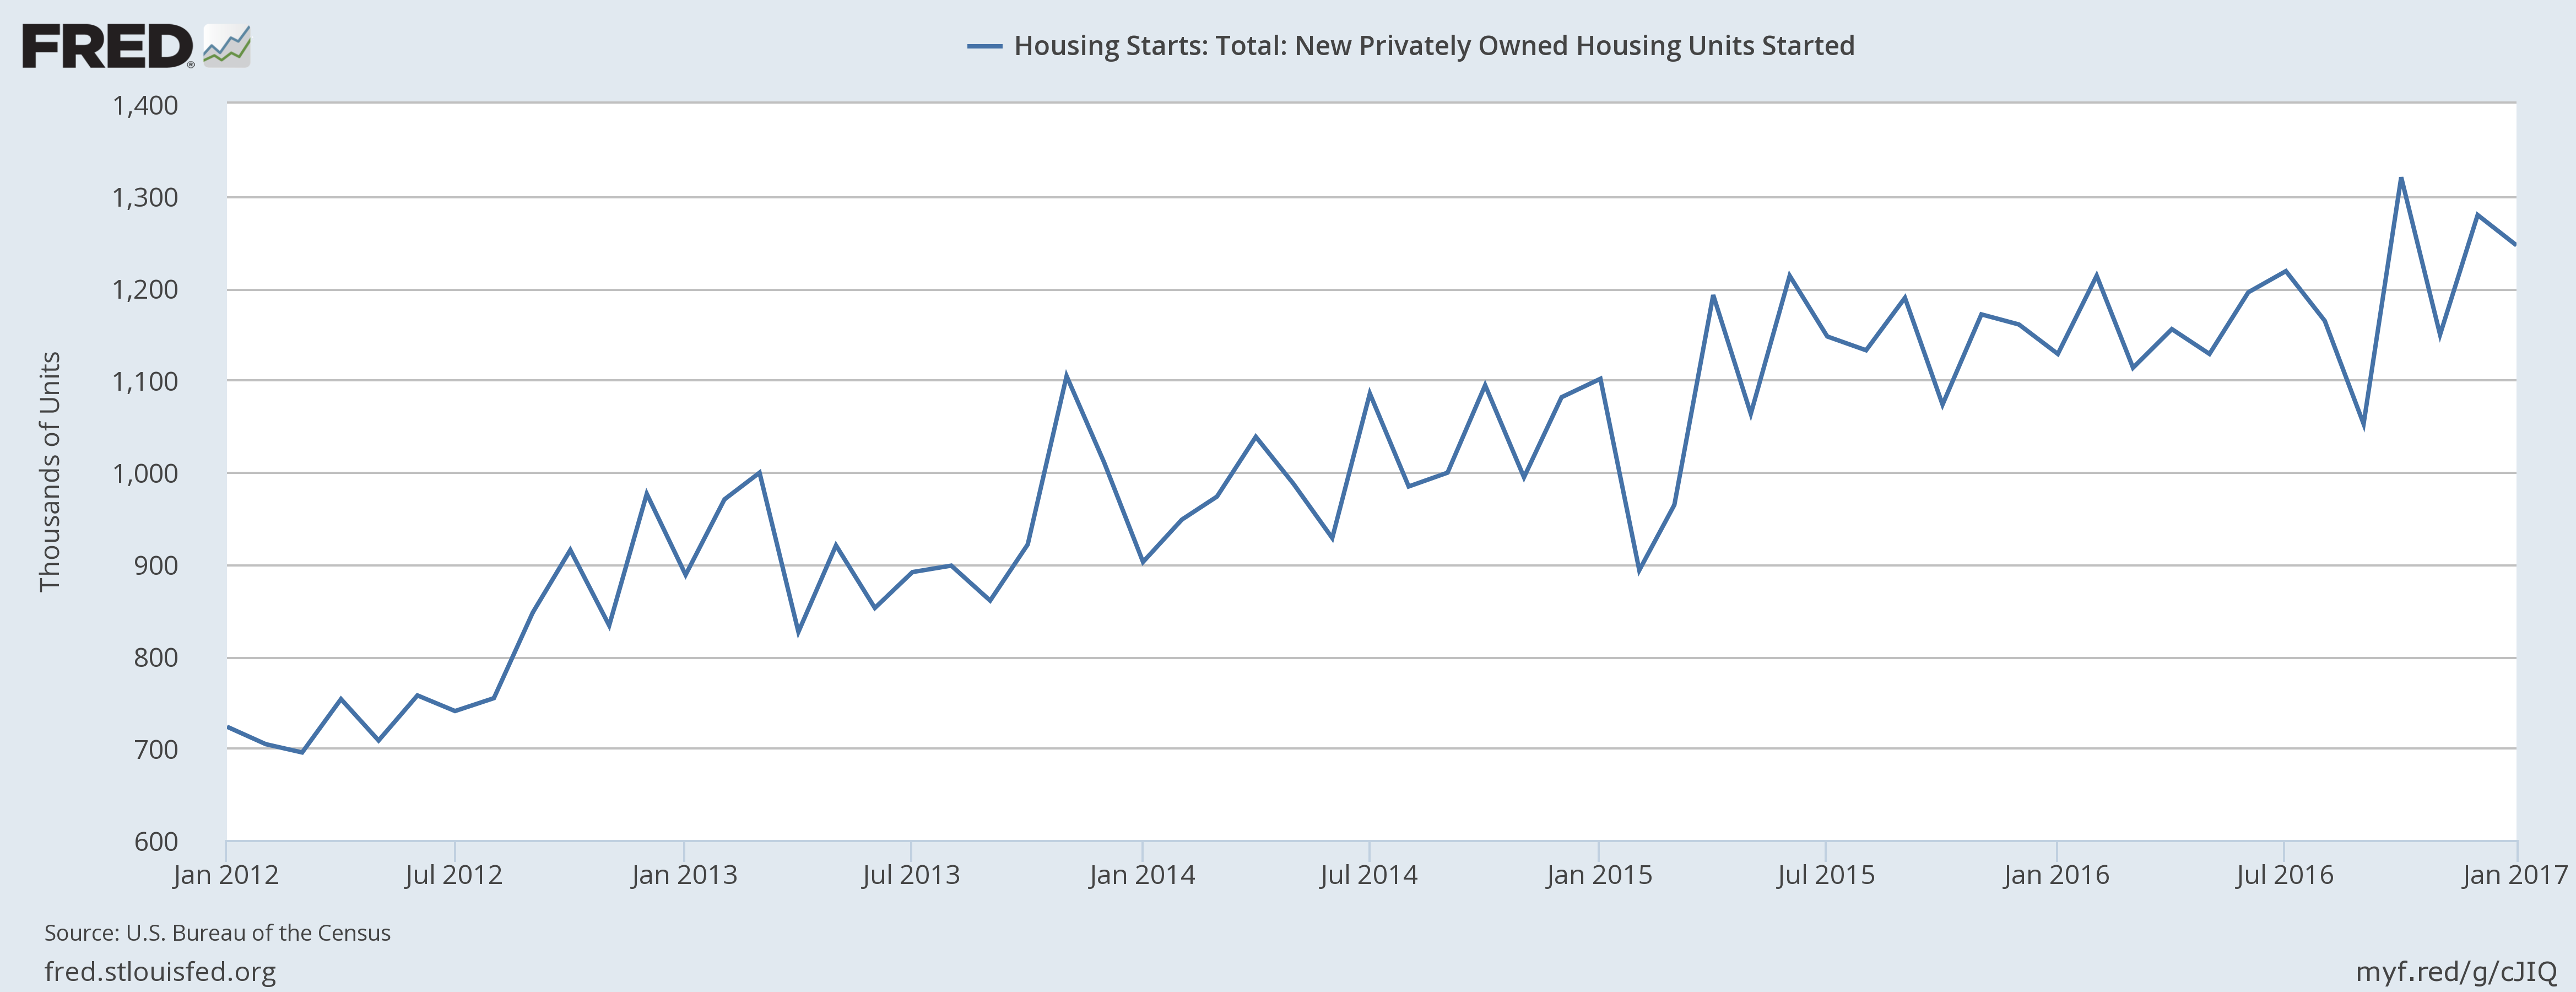 Housing Starts Decreased Slightly